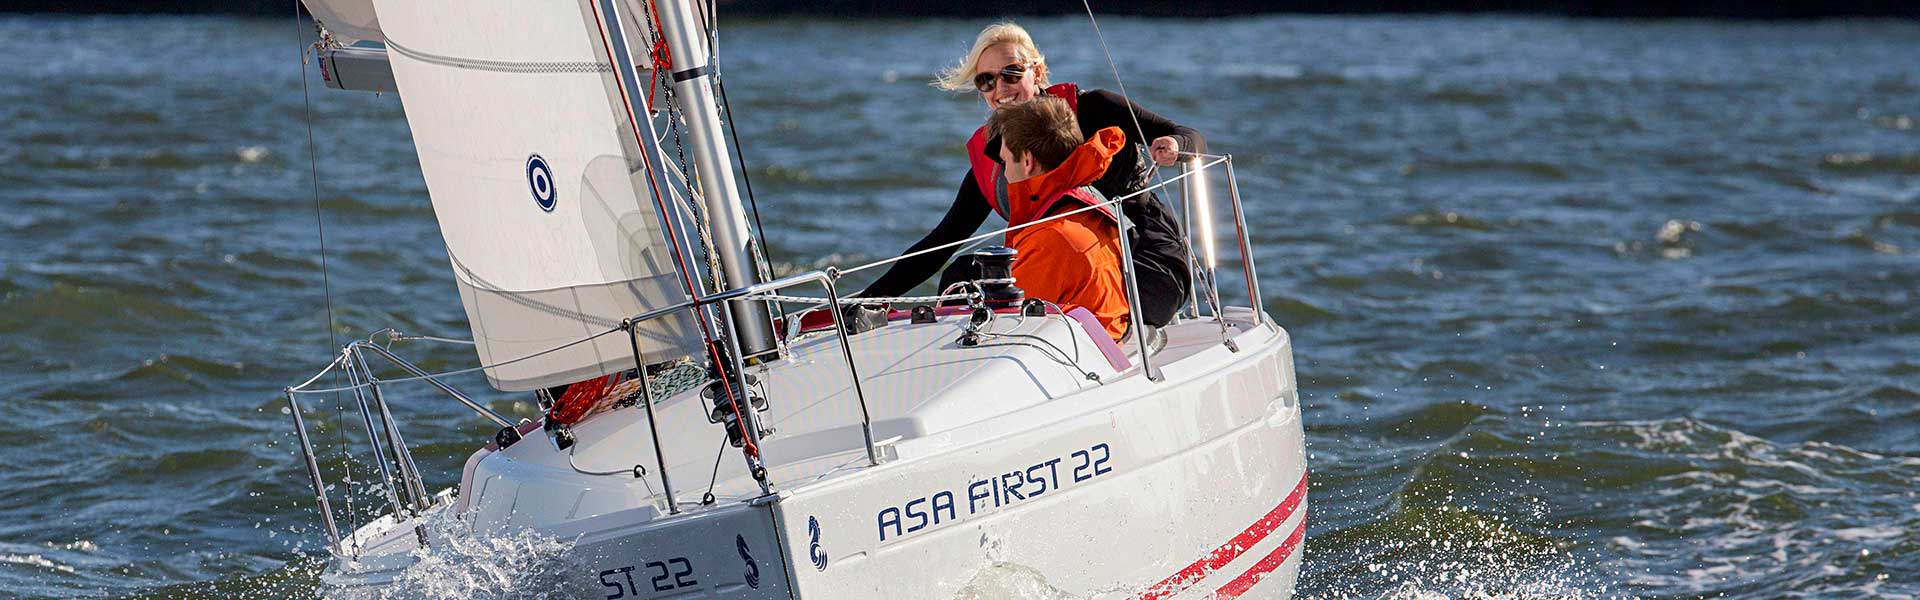 Man and woman enjoying sailing lessons from American Sailing Association